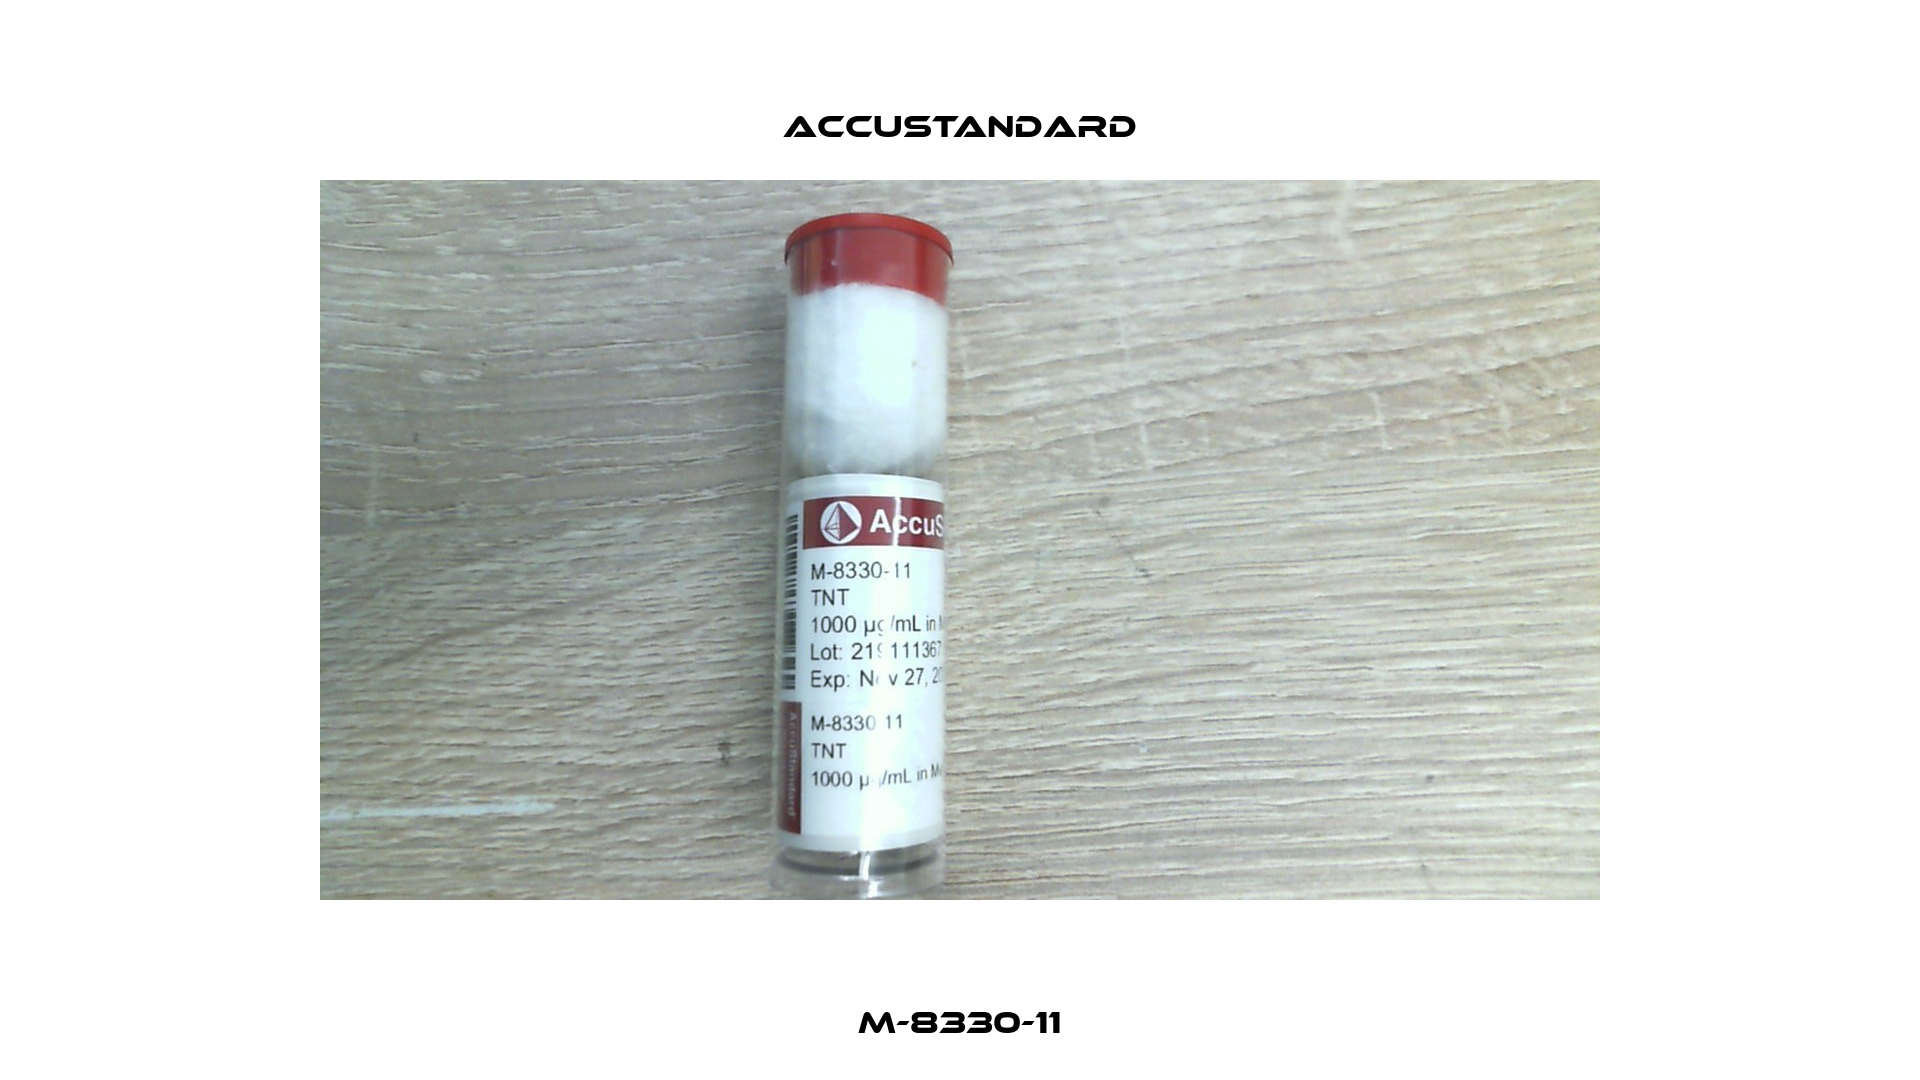 M-8330-11 AccuStandard